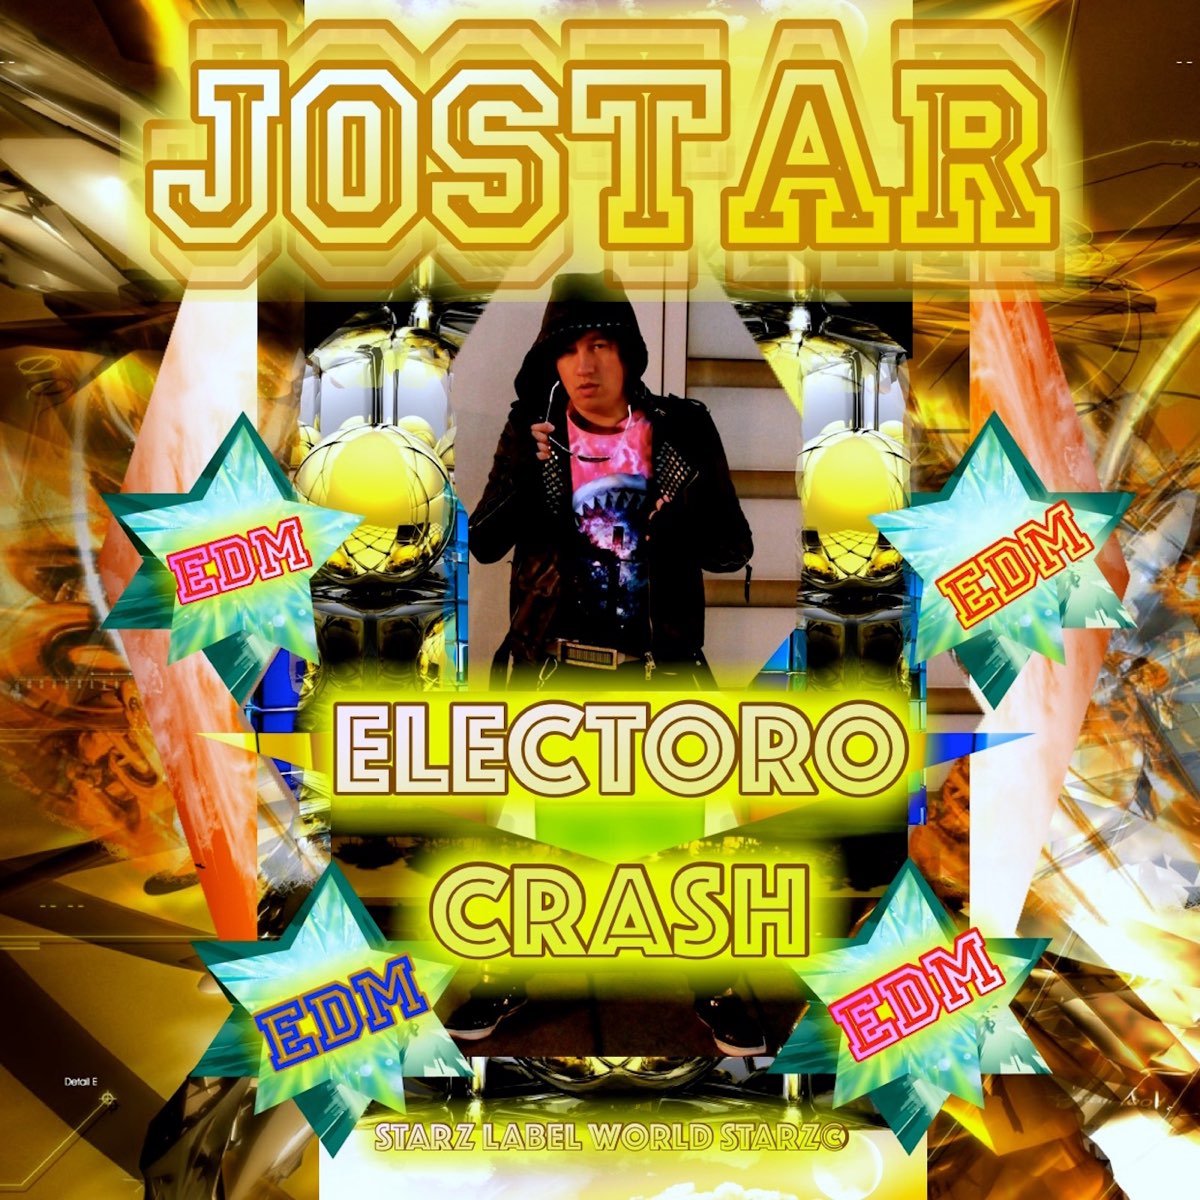 Ready go to ... https://itun.es/jp/3X02ab [ Electro Crash Edm by Jostar on Apple Music]